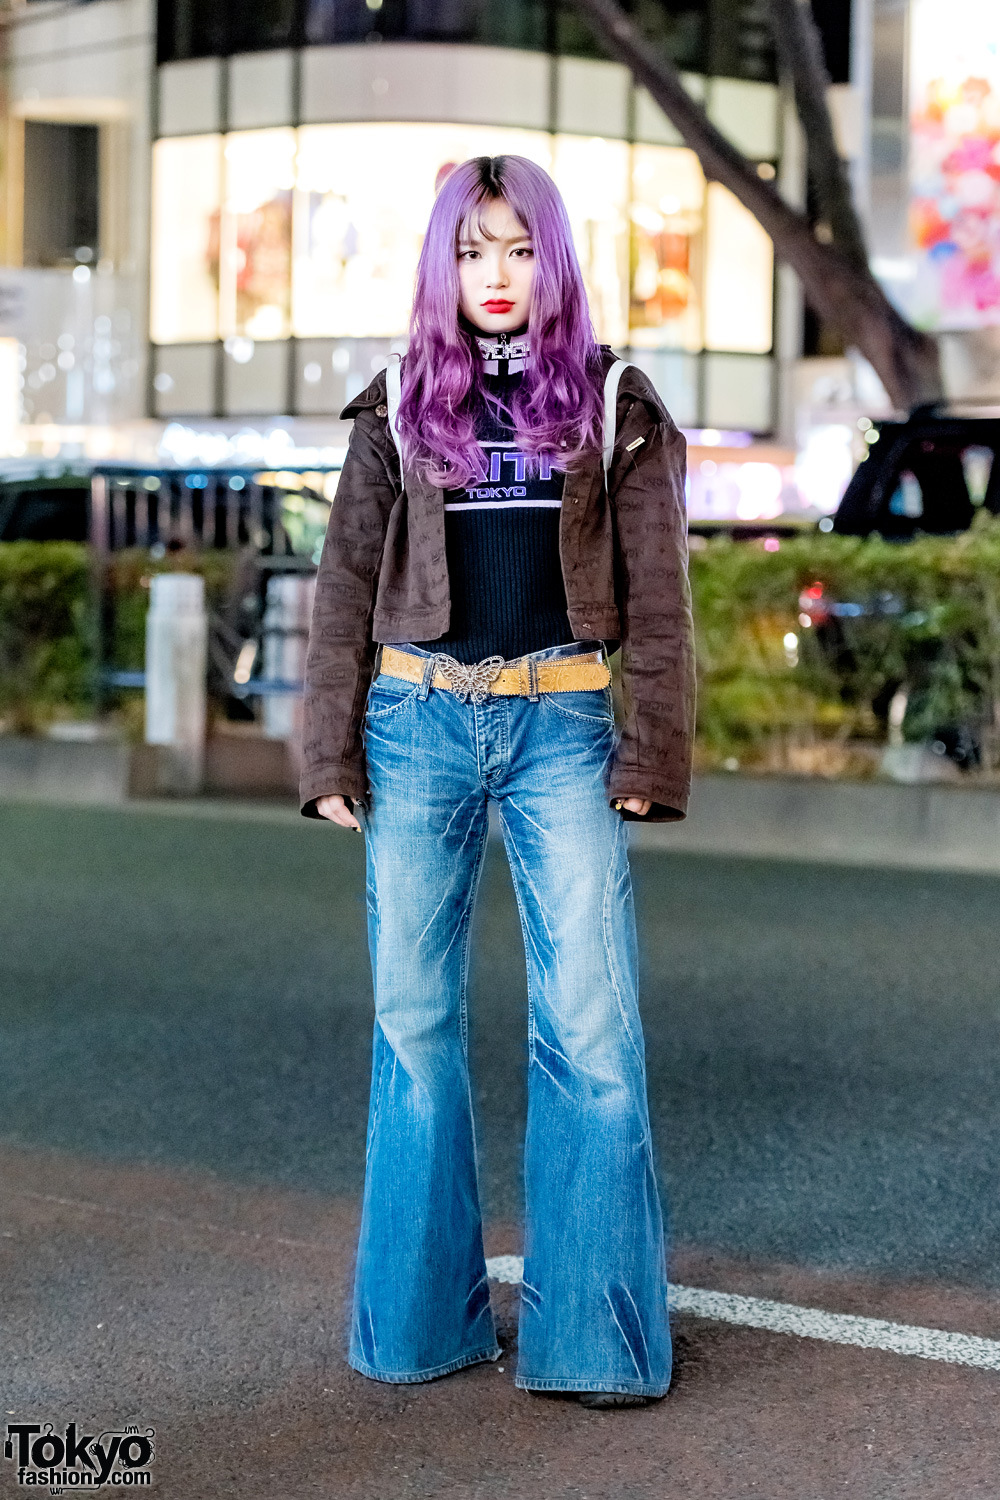 Bell Bottom Jeans, Butterfly Belt Buckle & Purple Hair On The Street in Harajuku